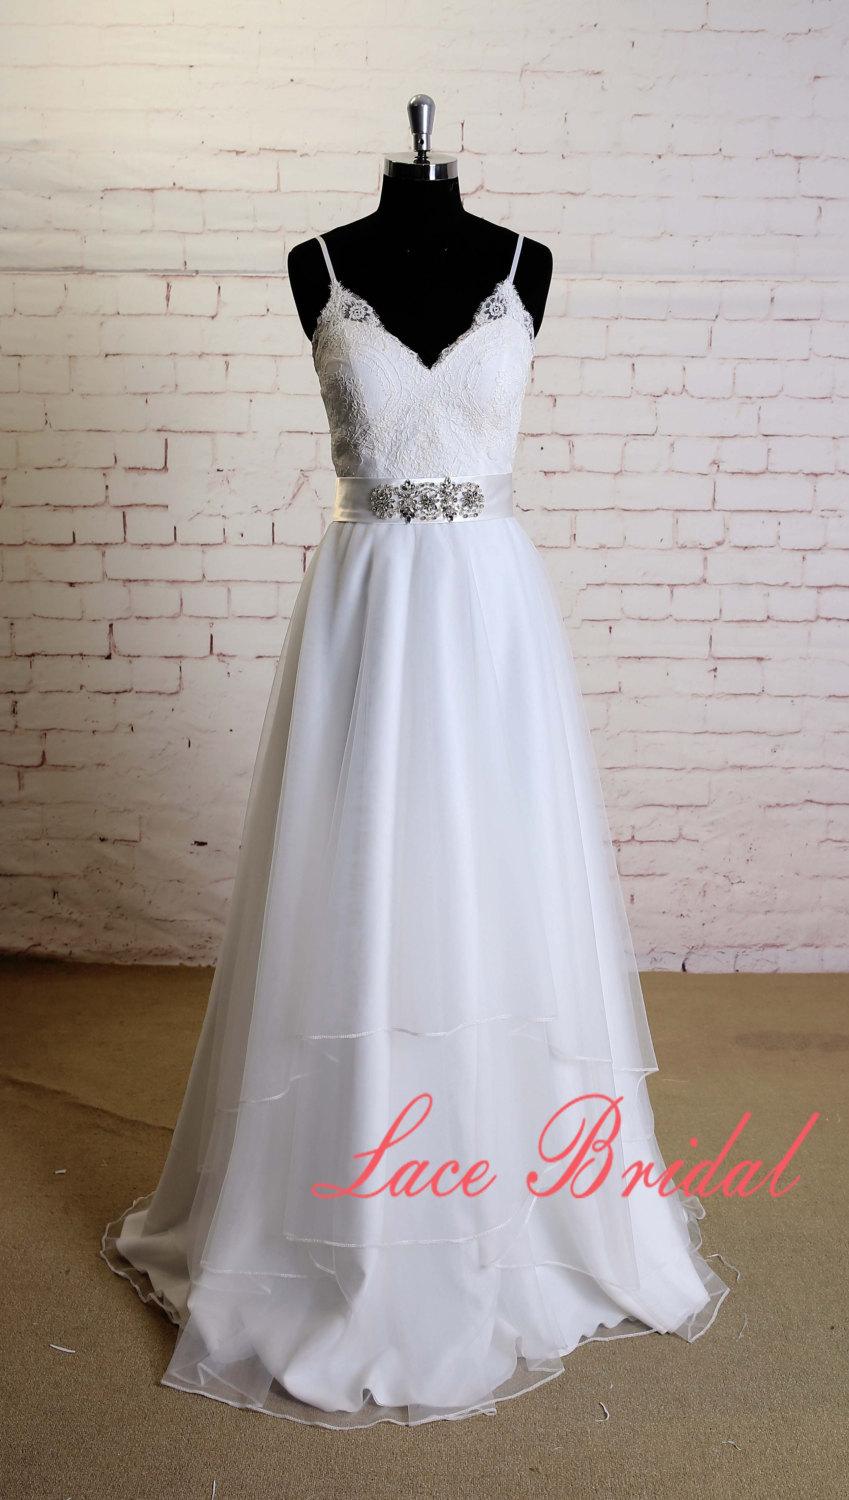 زفاف - Soft Layered Tulle Skirt Wedding Dress with Spaghetti Straps Classic Lace Bodice Bridal Gown with Beading Sash